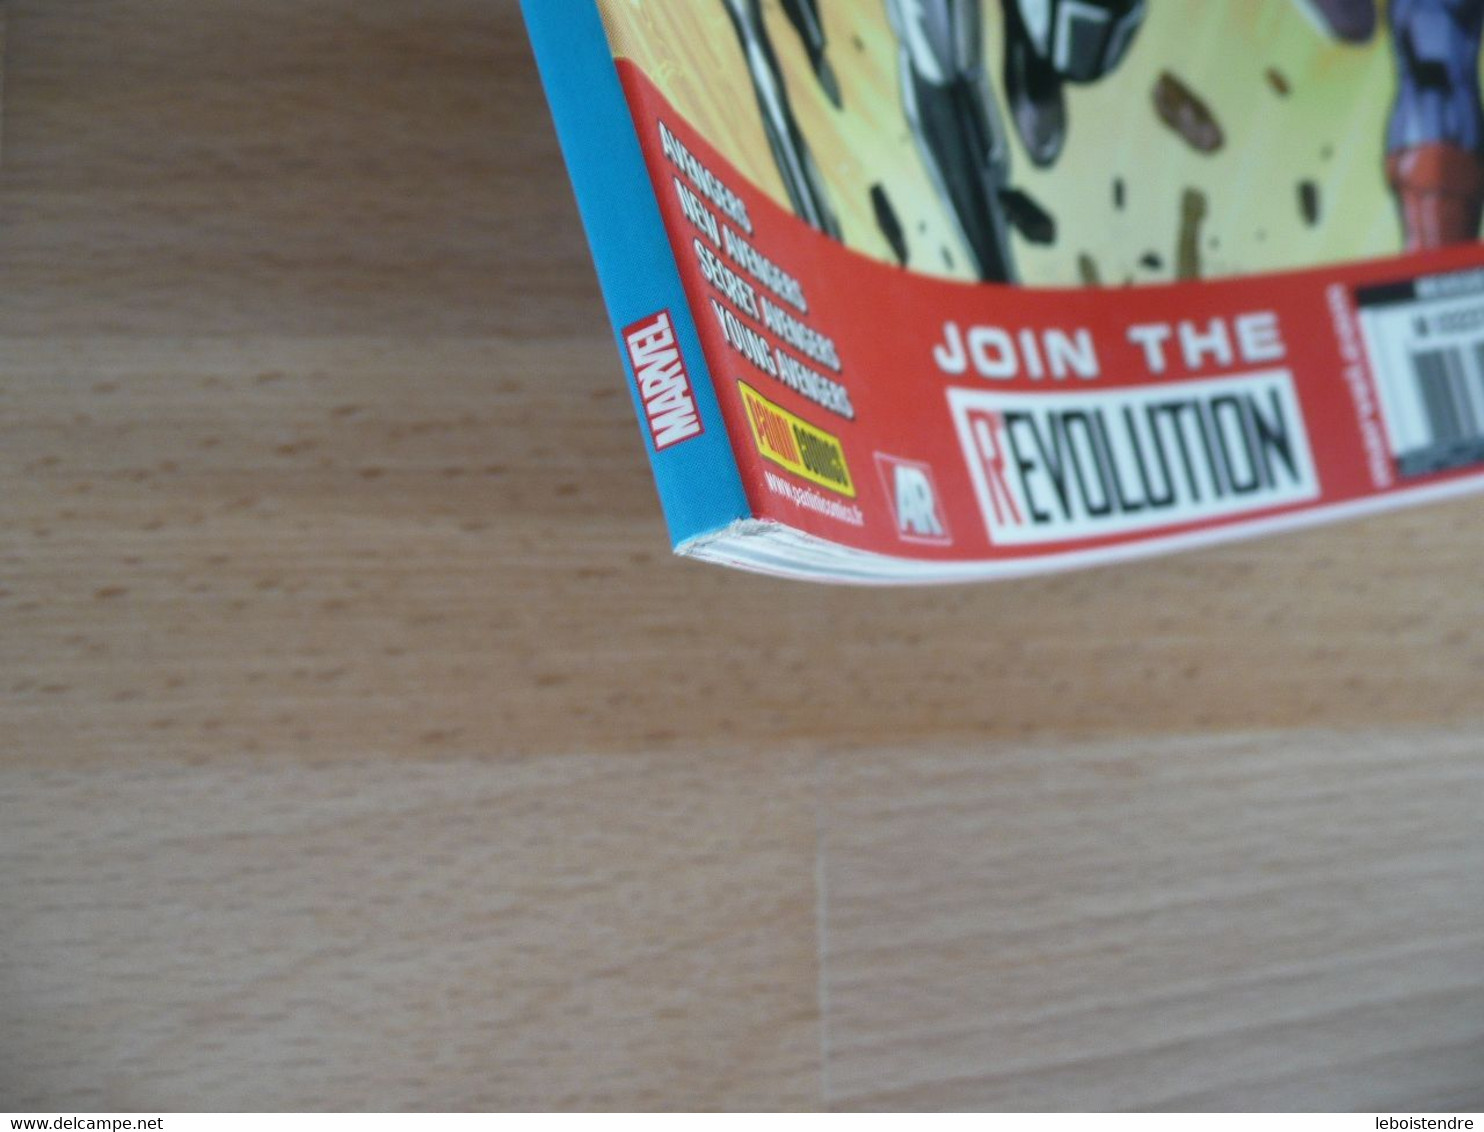 AVENGERS N 3 SEPTEMBRE 2013 JOIN THE REVOLUTION MARVEL  PANINI COMICS  TRES BON ETAT - Marvel France